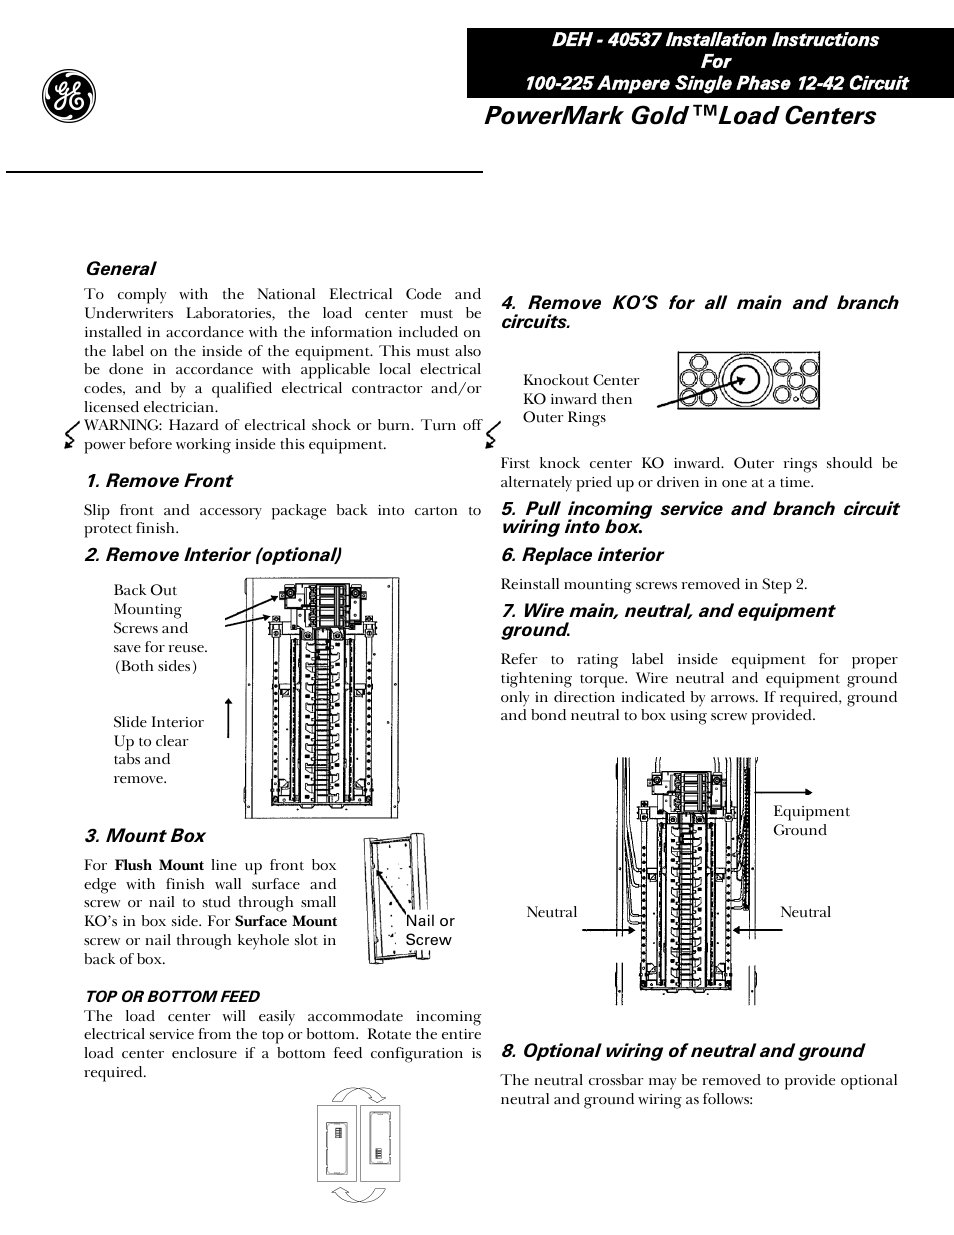 ge powermark gold load center wiring diagram